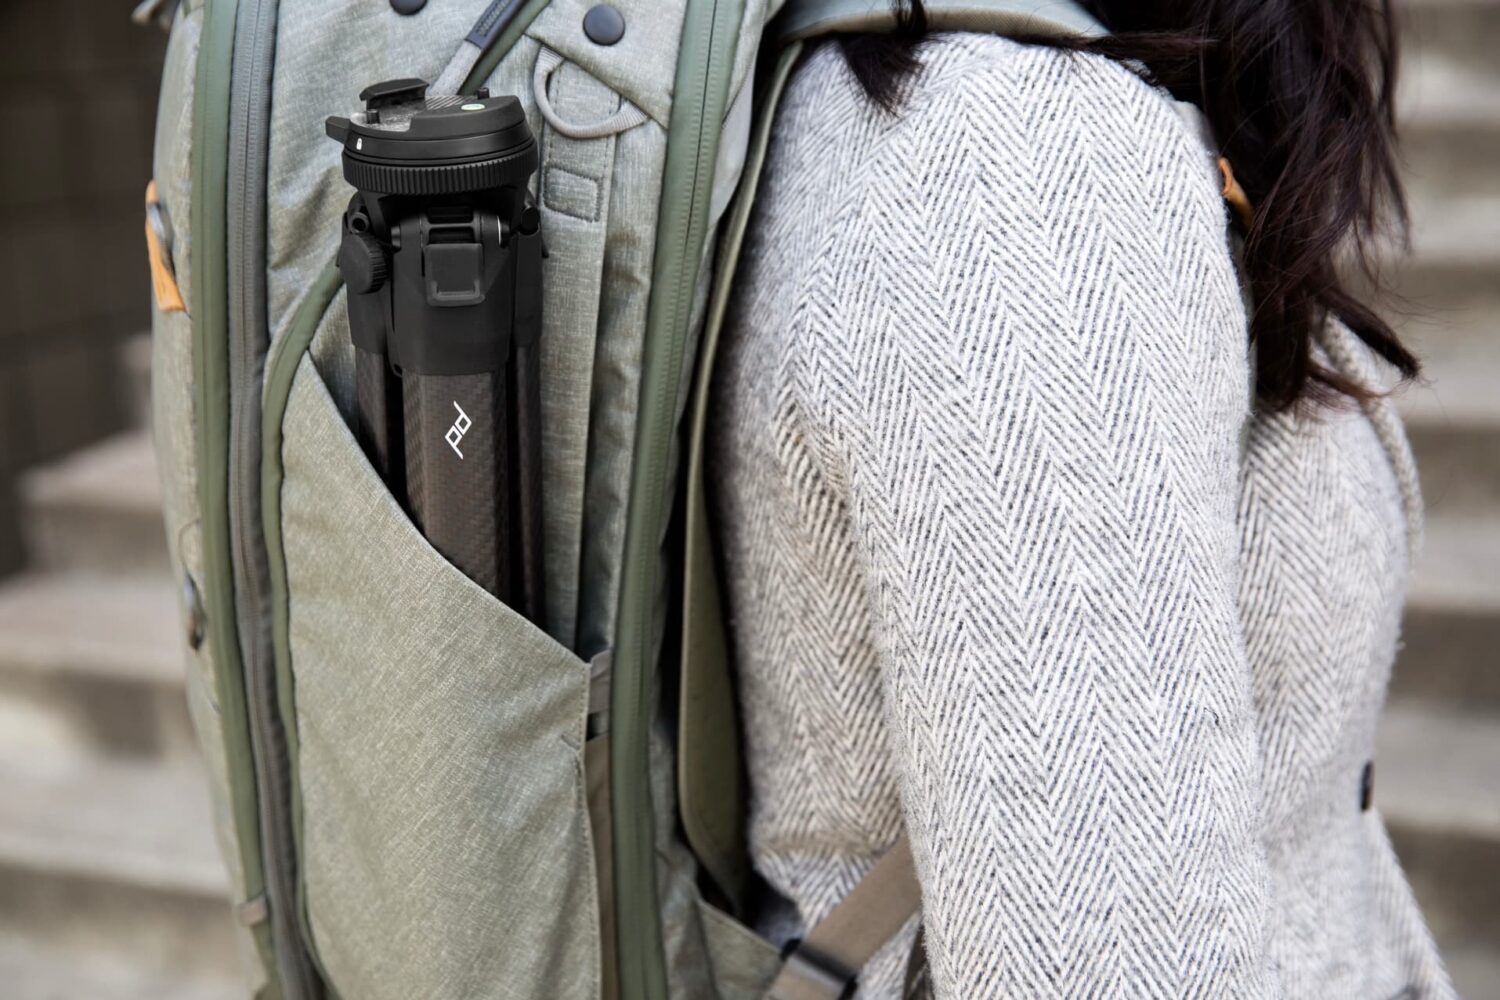 Peak Design travel tripod inside a Peak Design backpack.